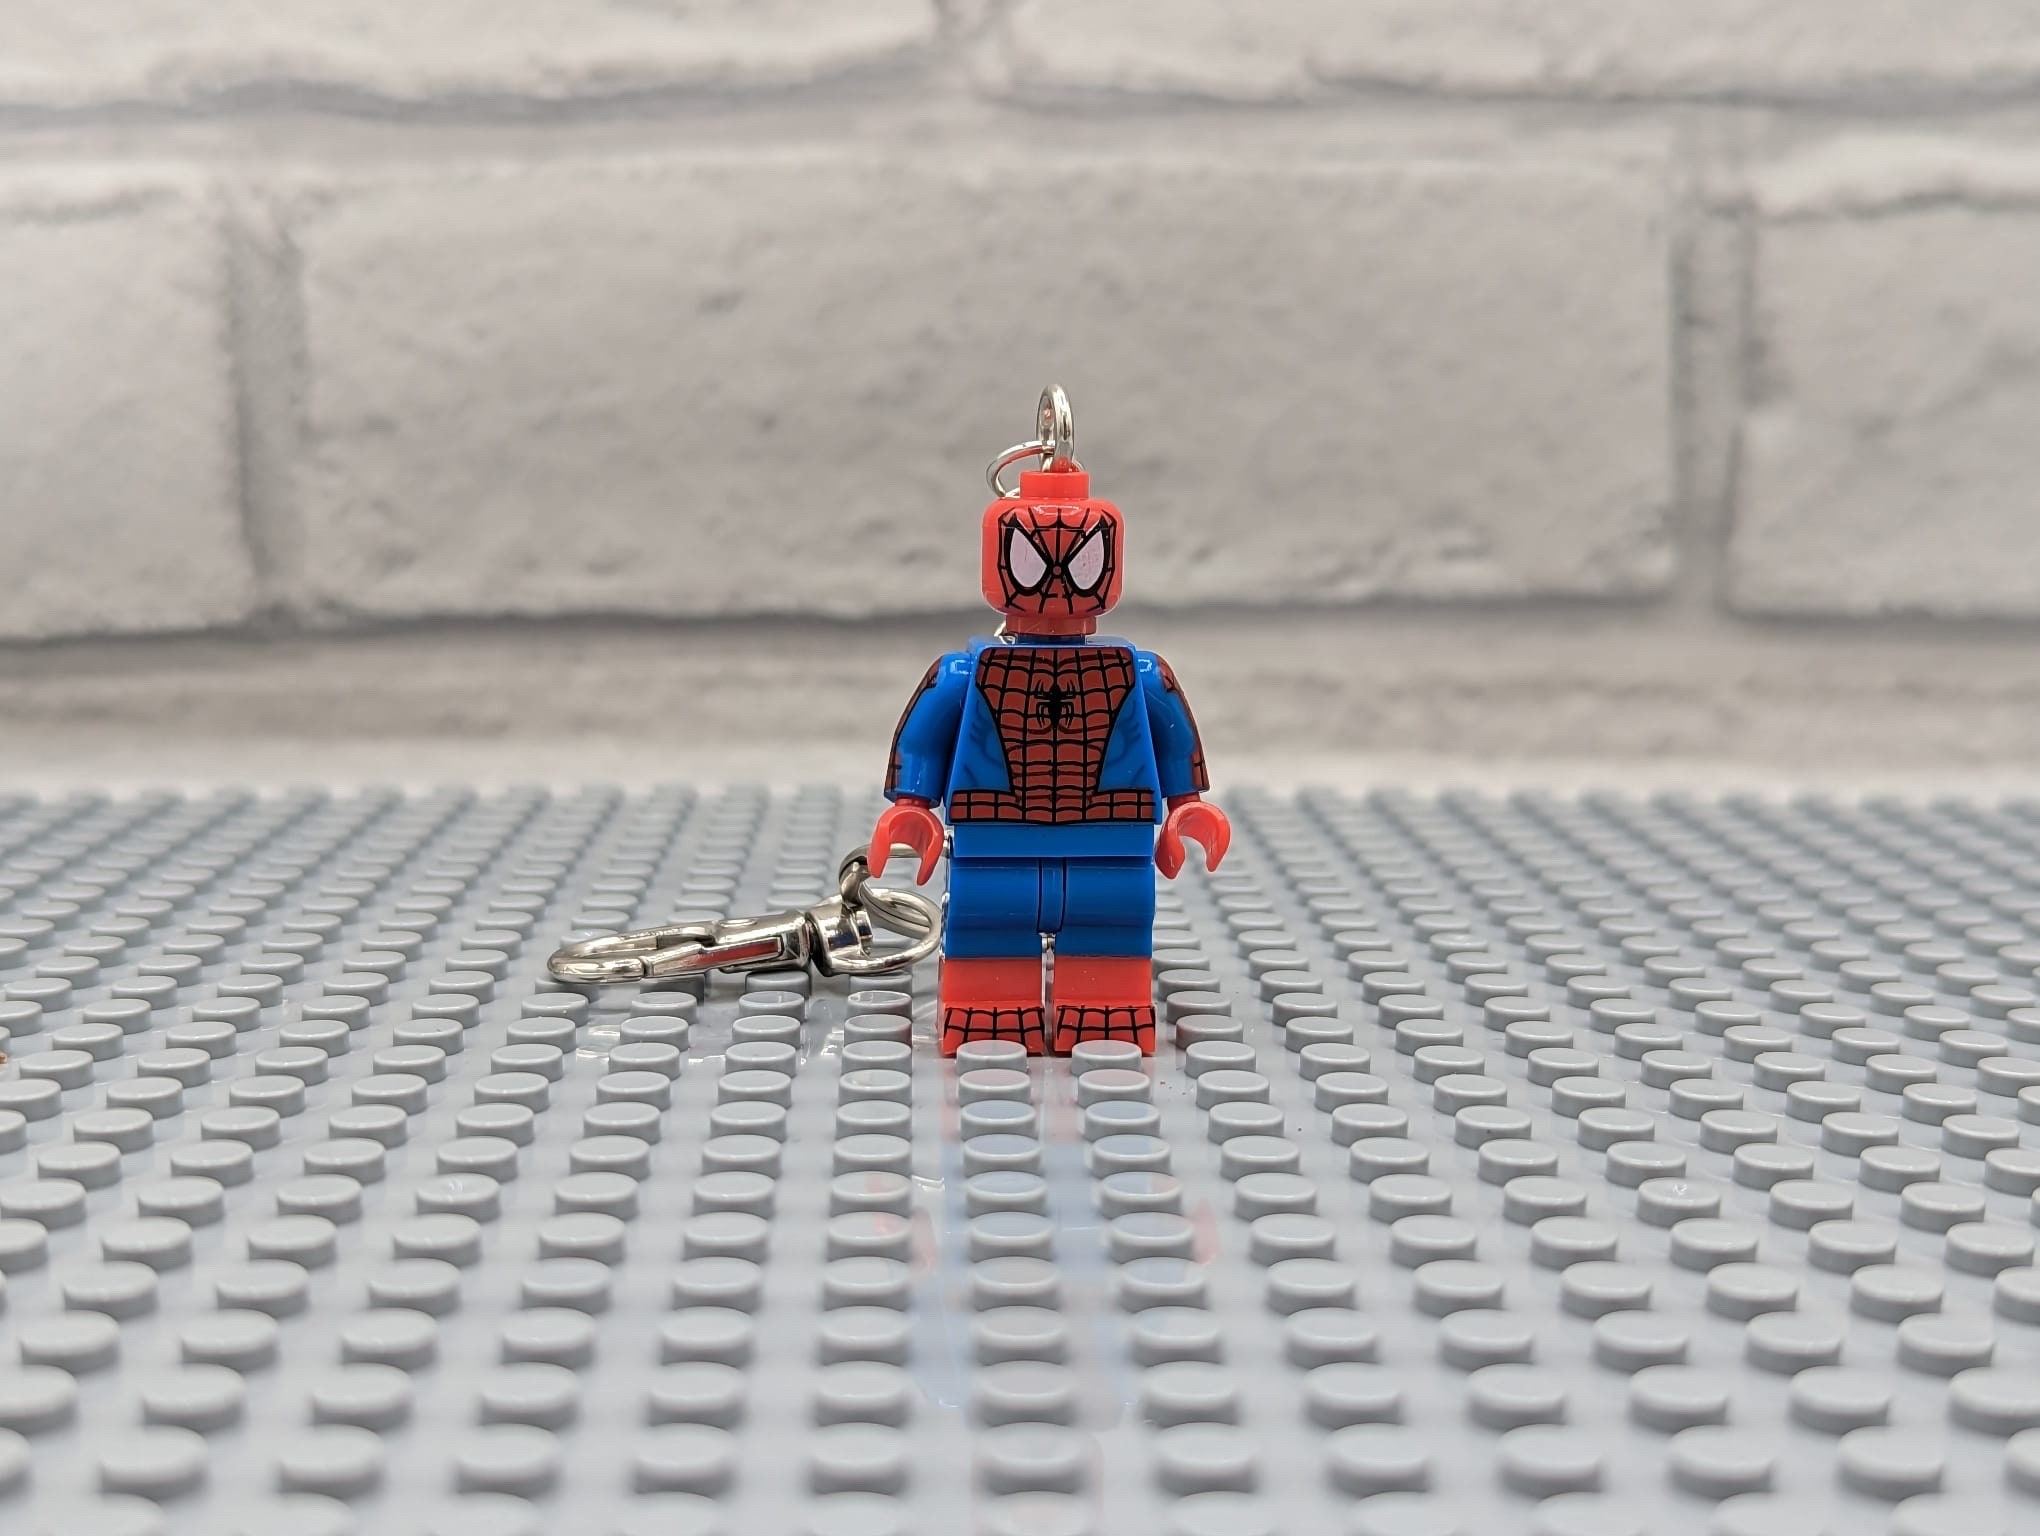 Spiderman Zipper Pull in Polymer Clay. Superhero Zip Pull in